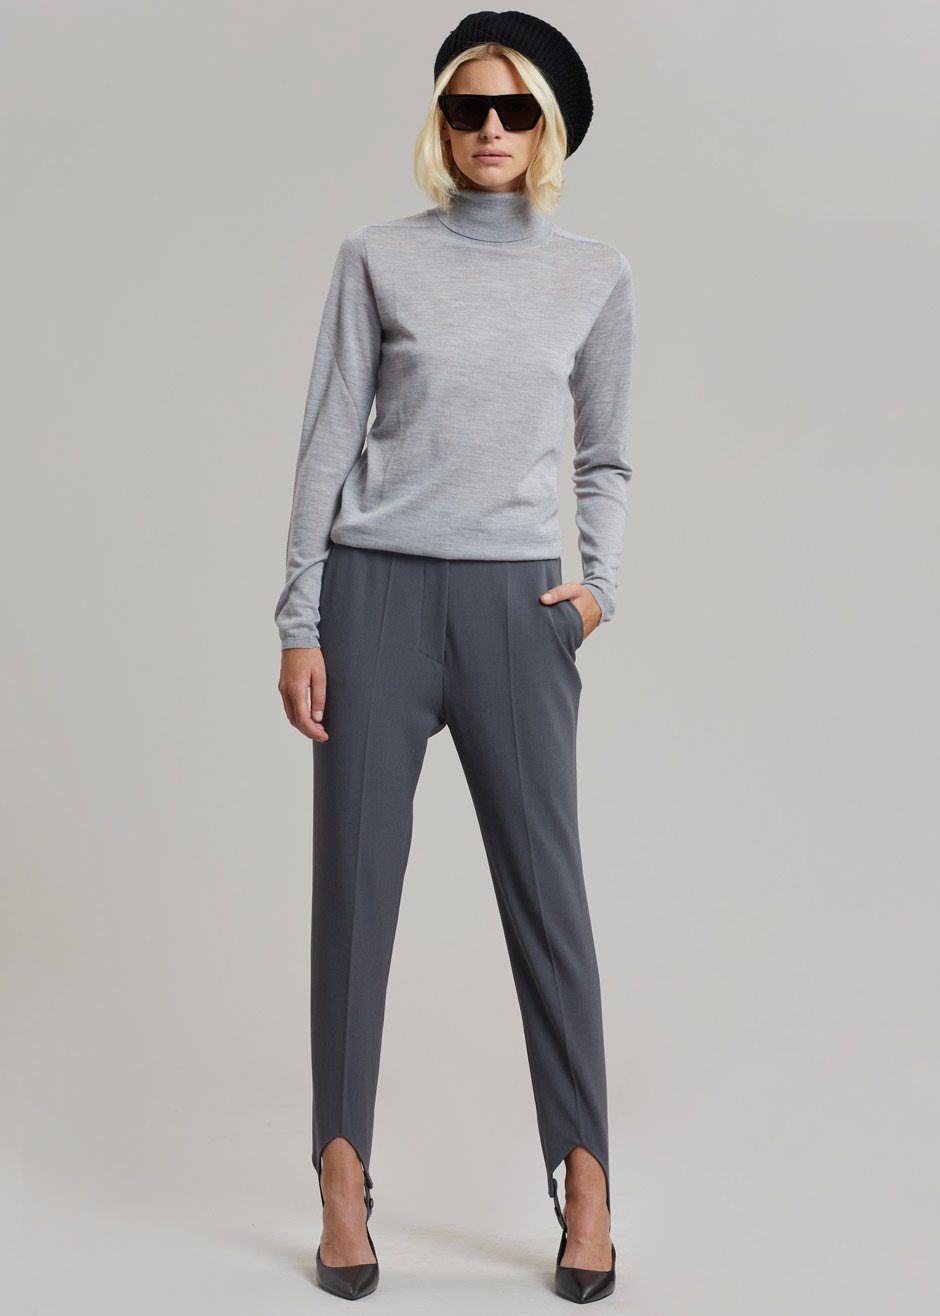 Nanushka Darby Stirrup Suit Pants - Grey - 7